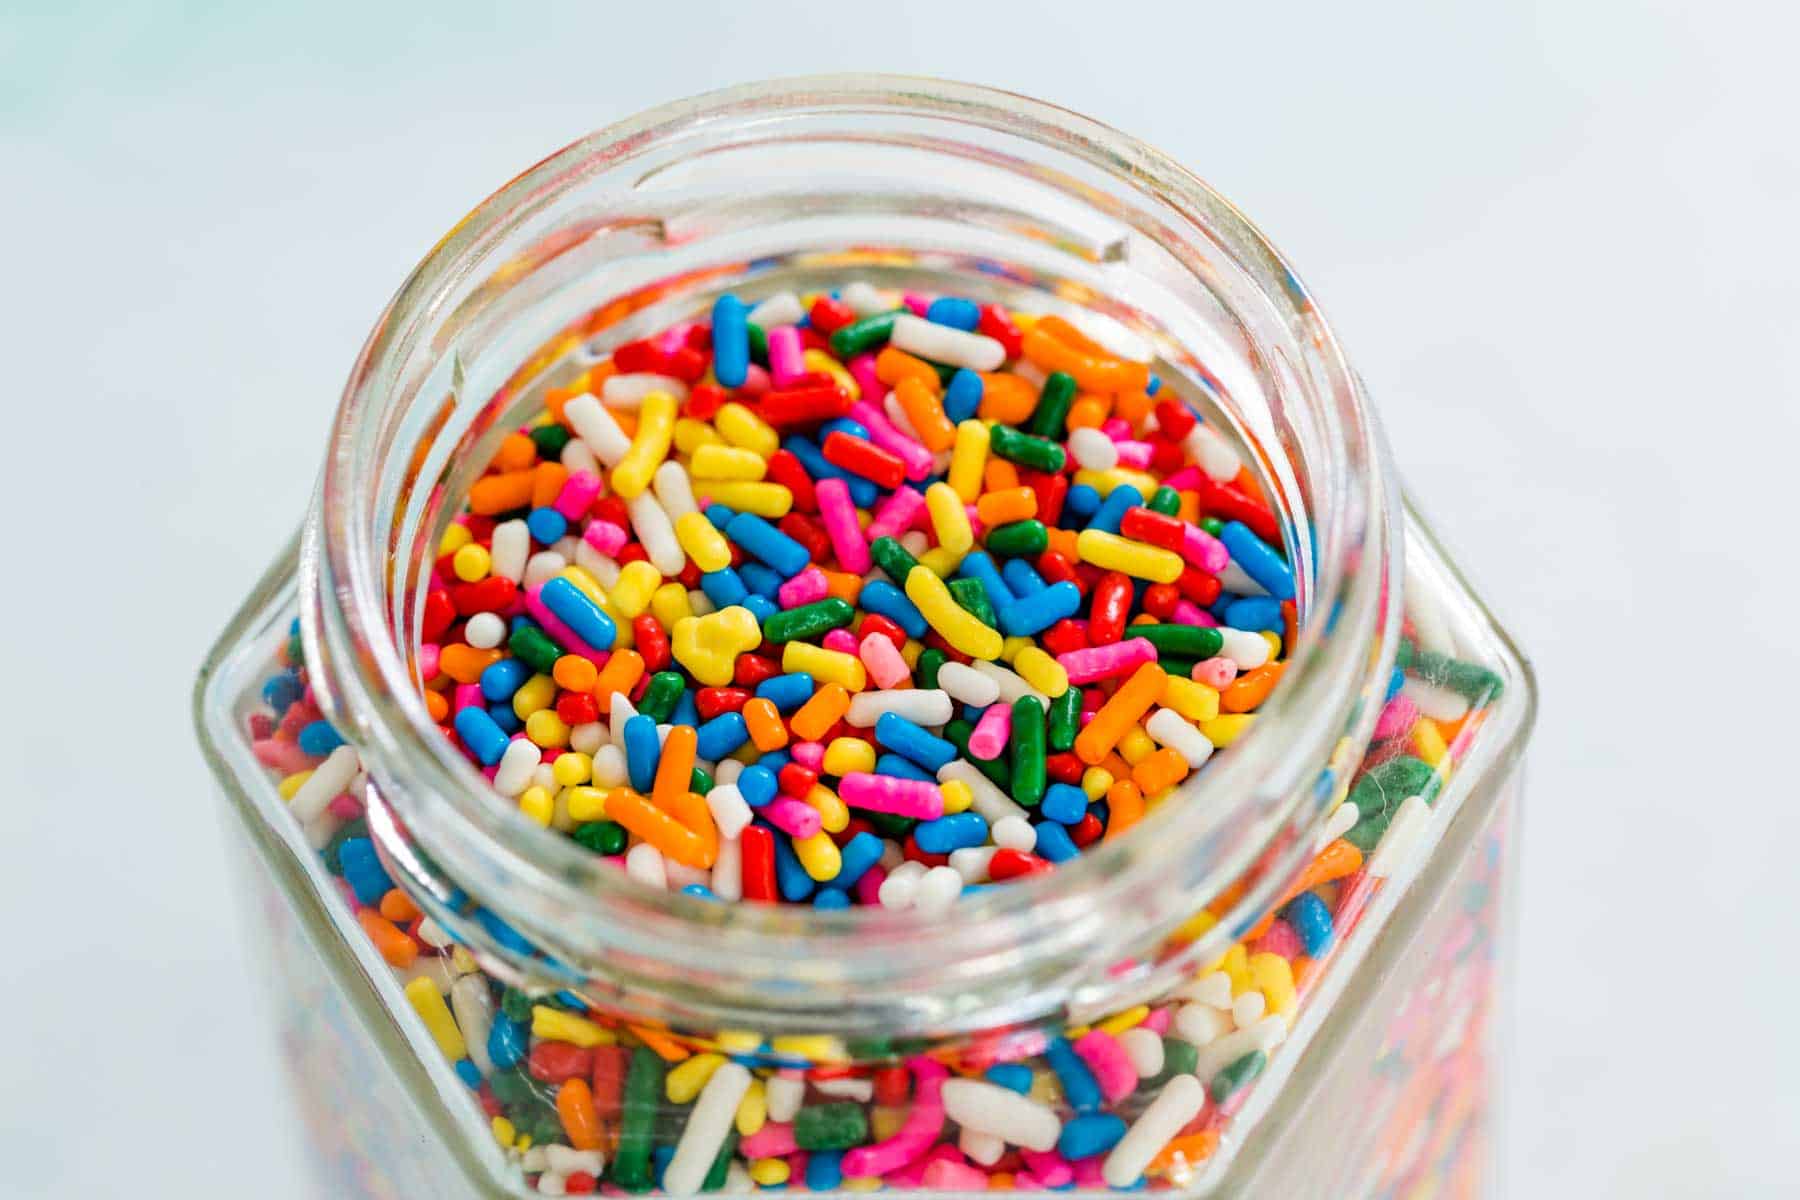 A glass jar of rainbow sprinkles.